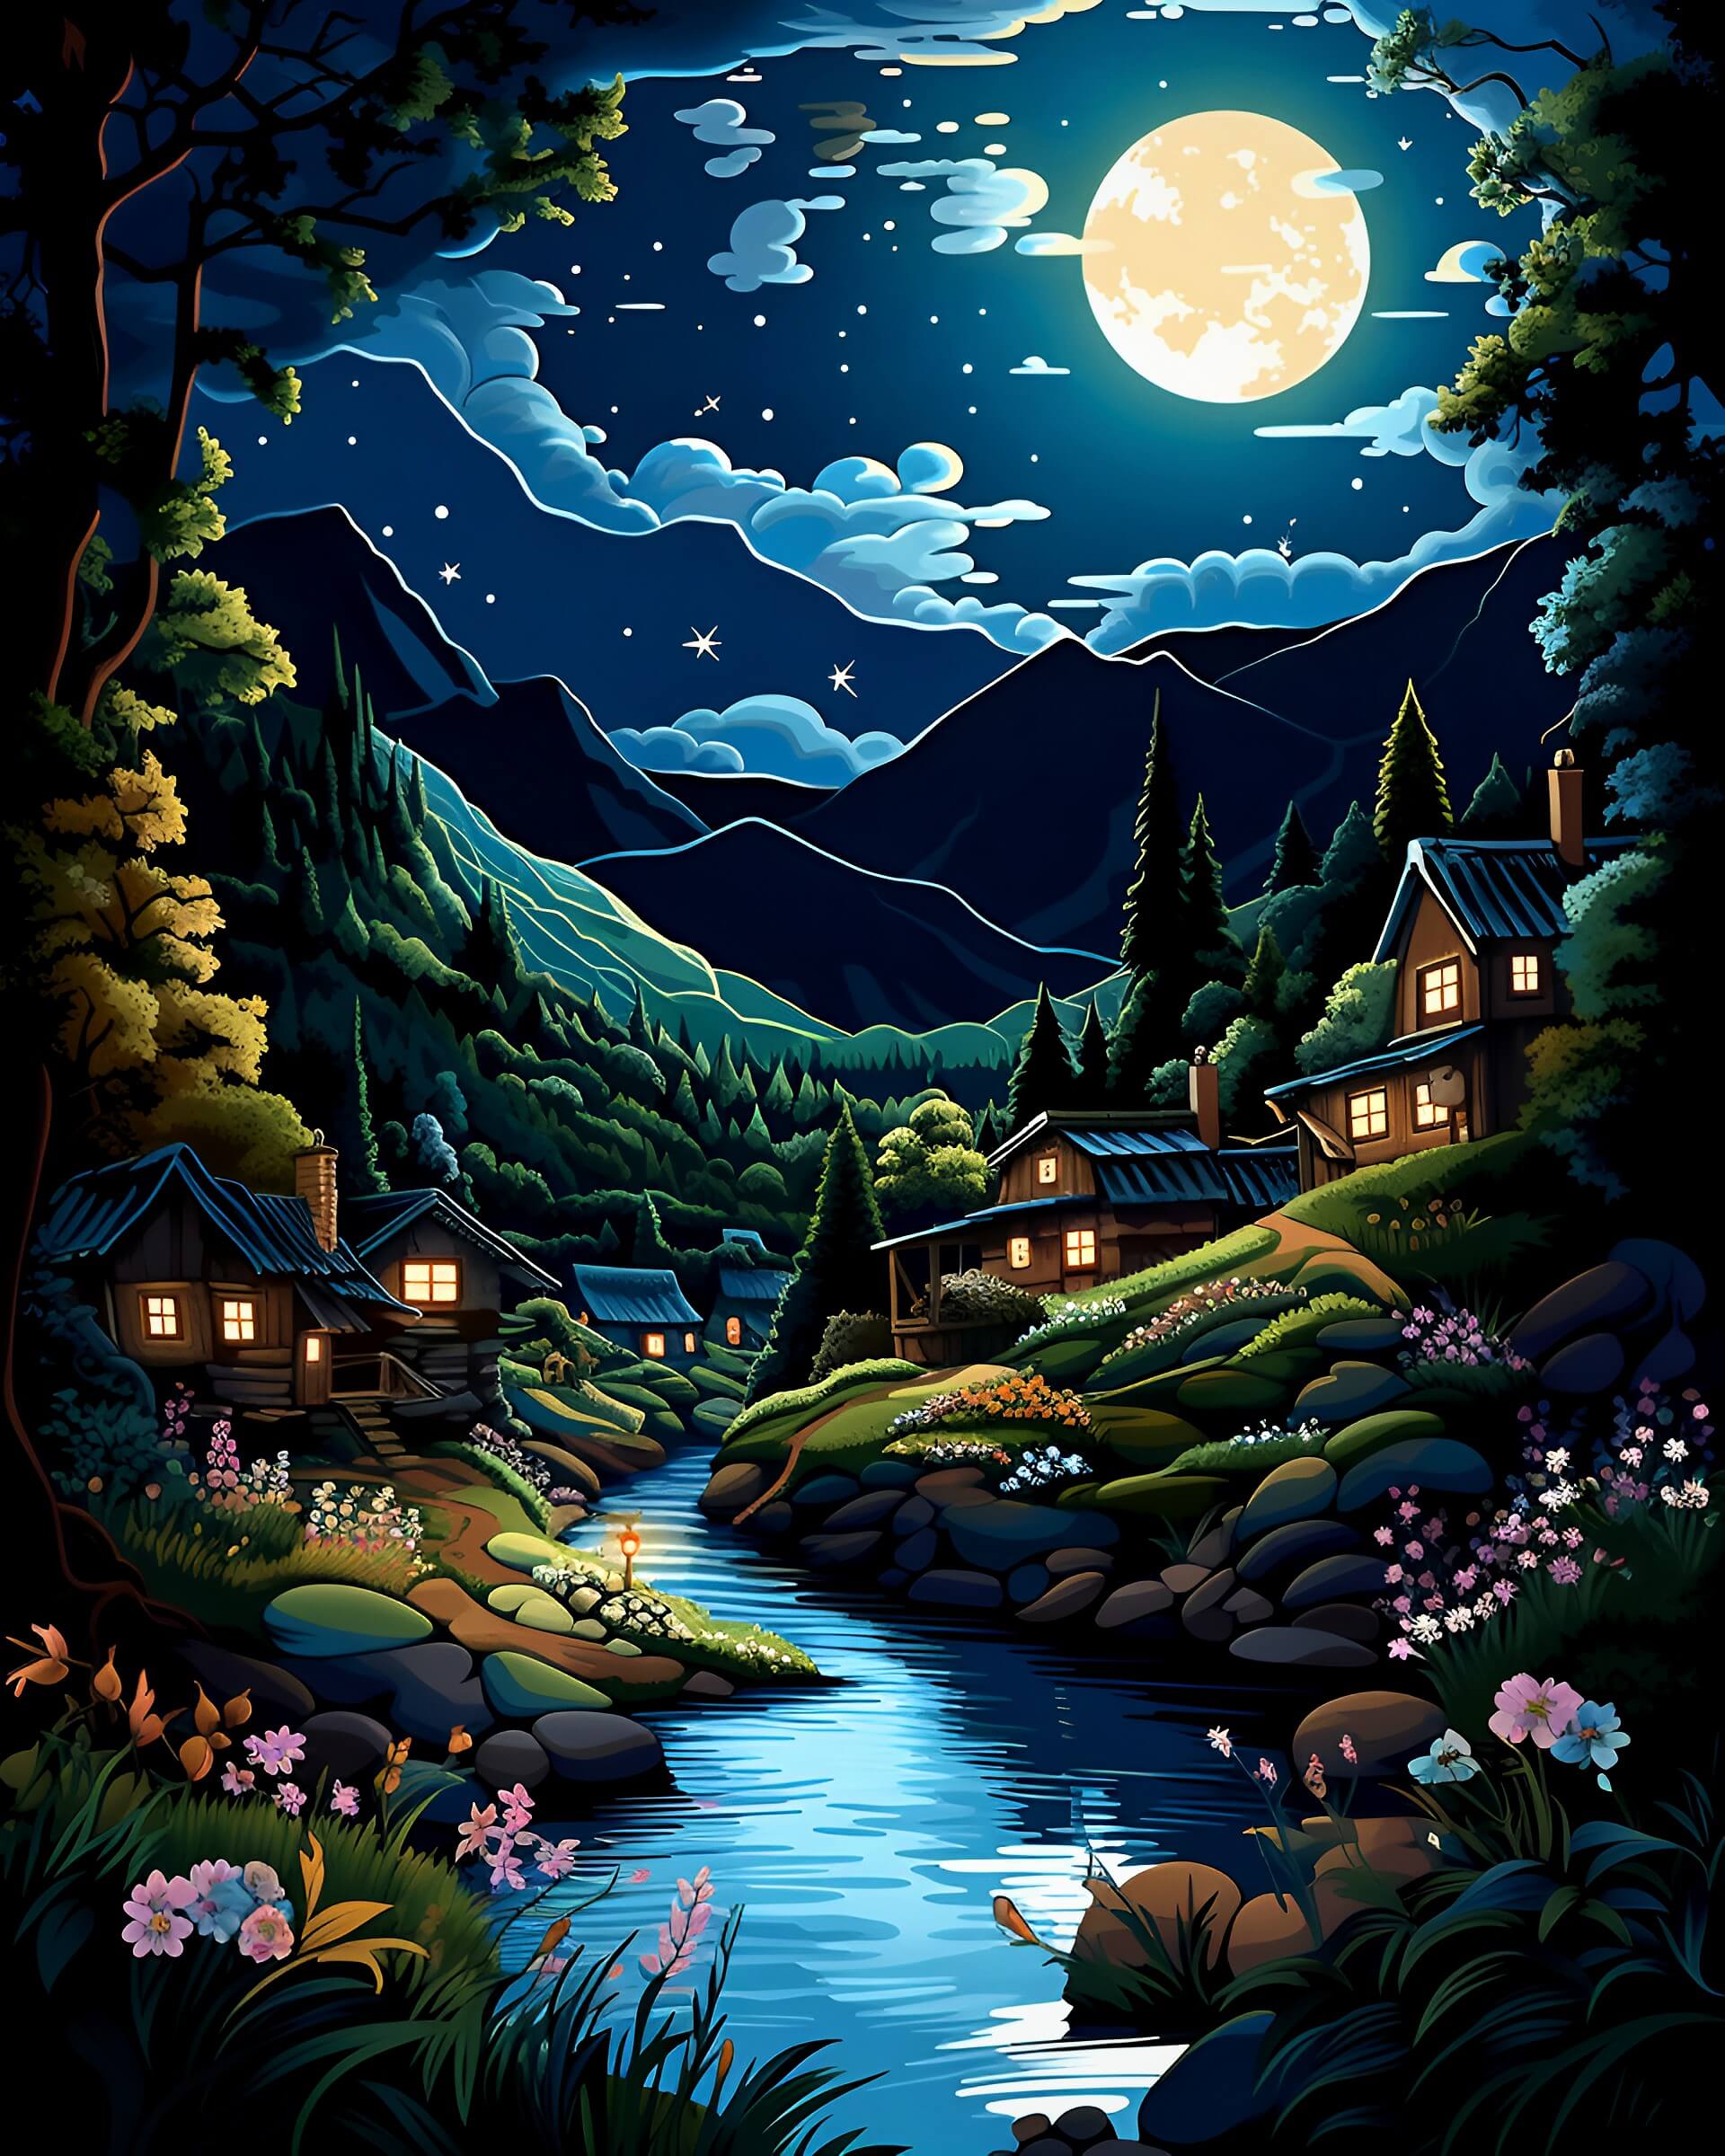 AI Artwork - Peaceful Village Under Moonlight